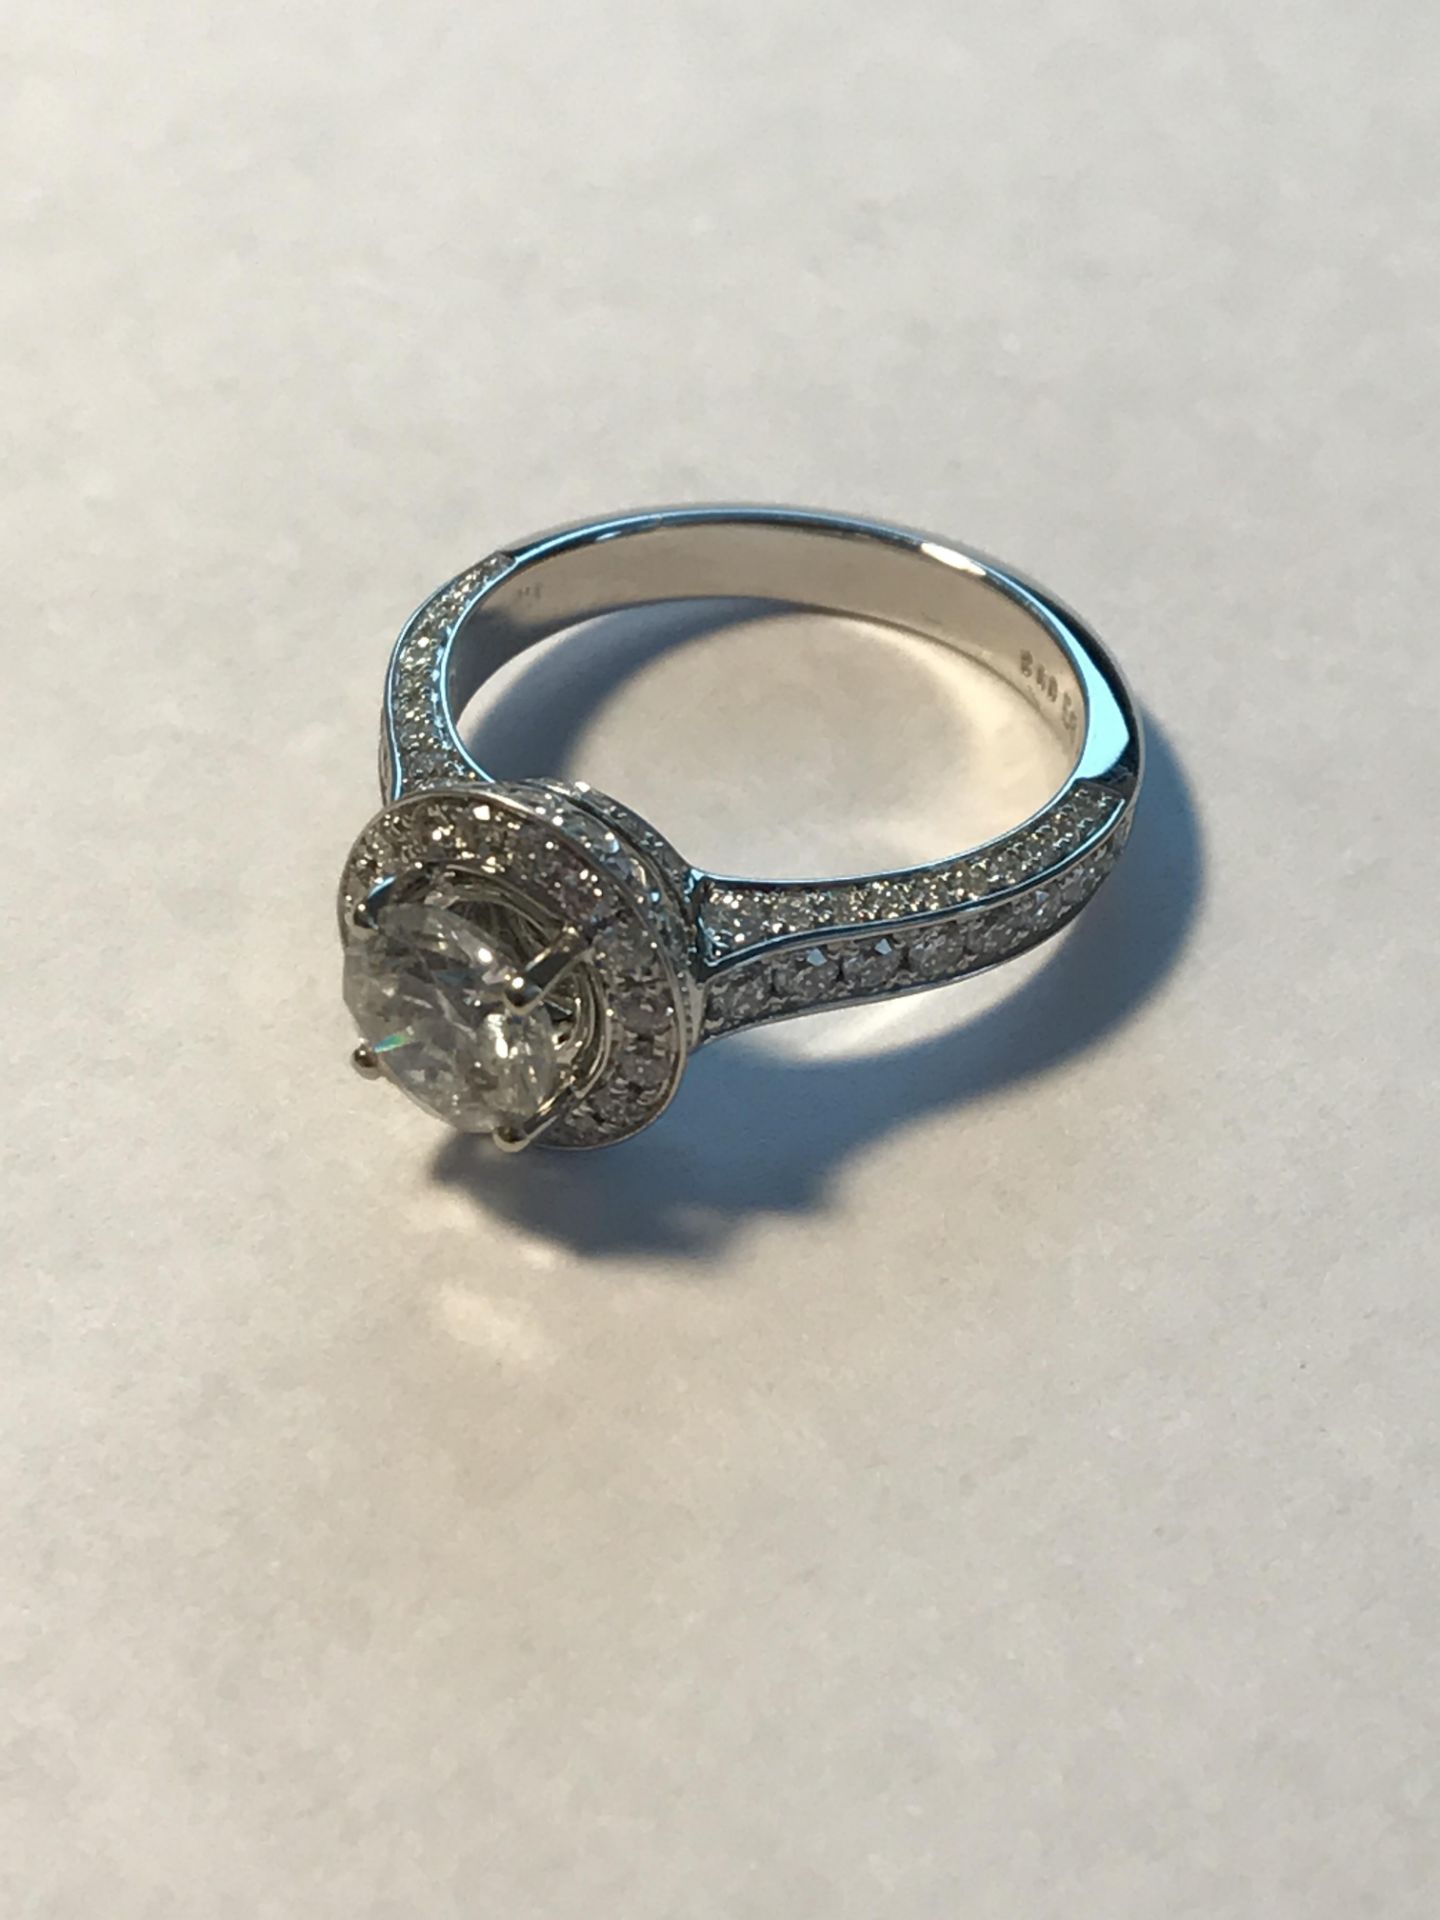 18 Carat White Gold Diamond Engagement Ring - Unworn 10/10 Condition - Image 7 of 18